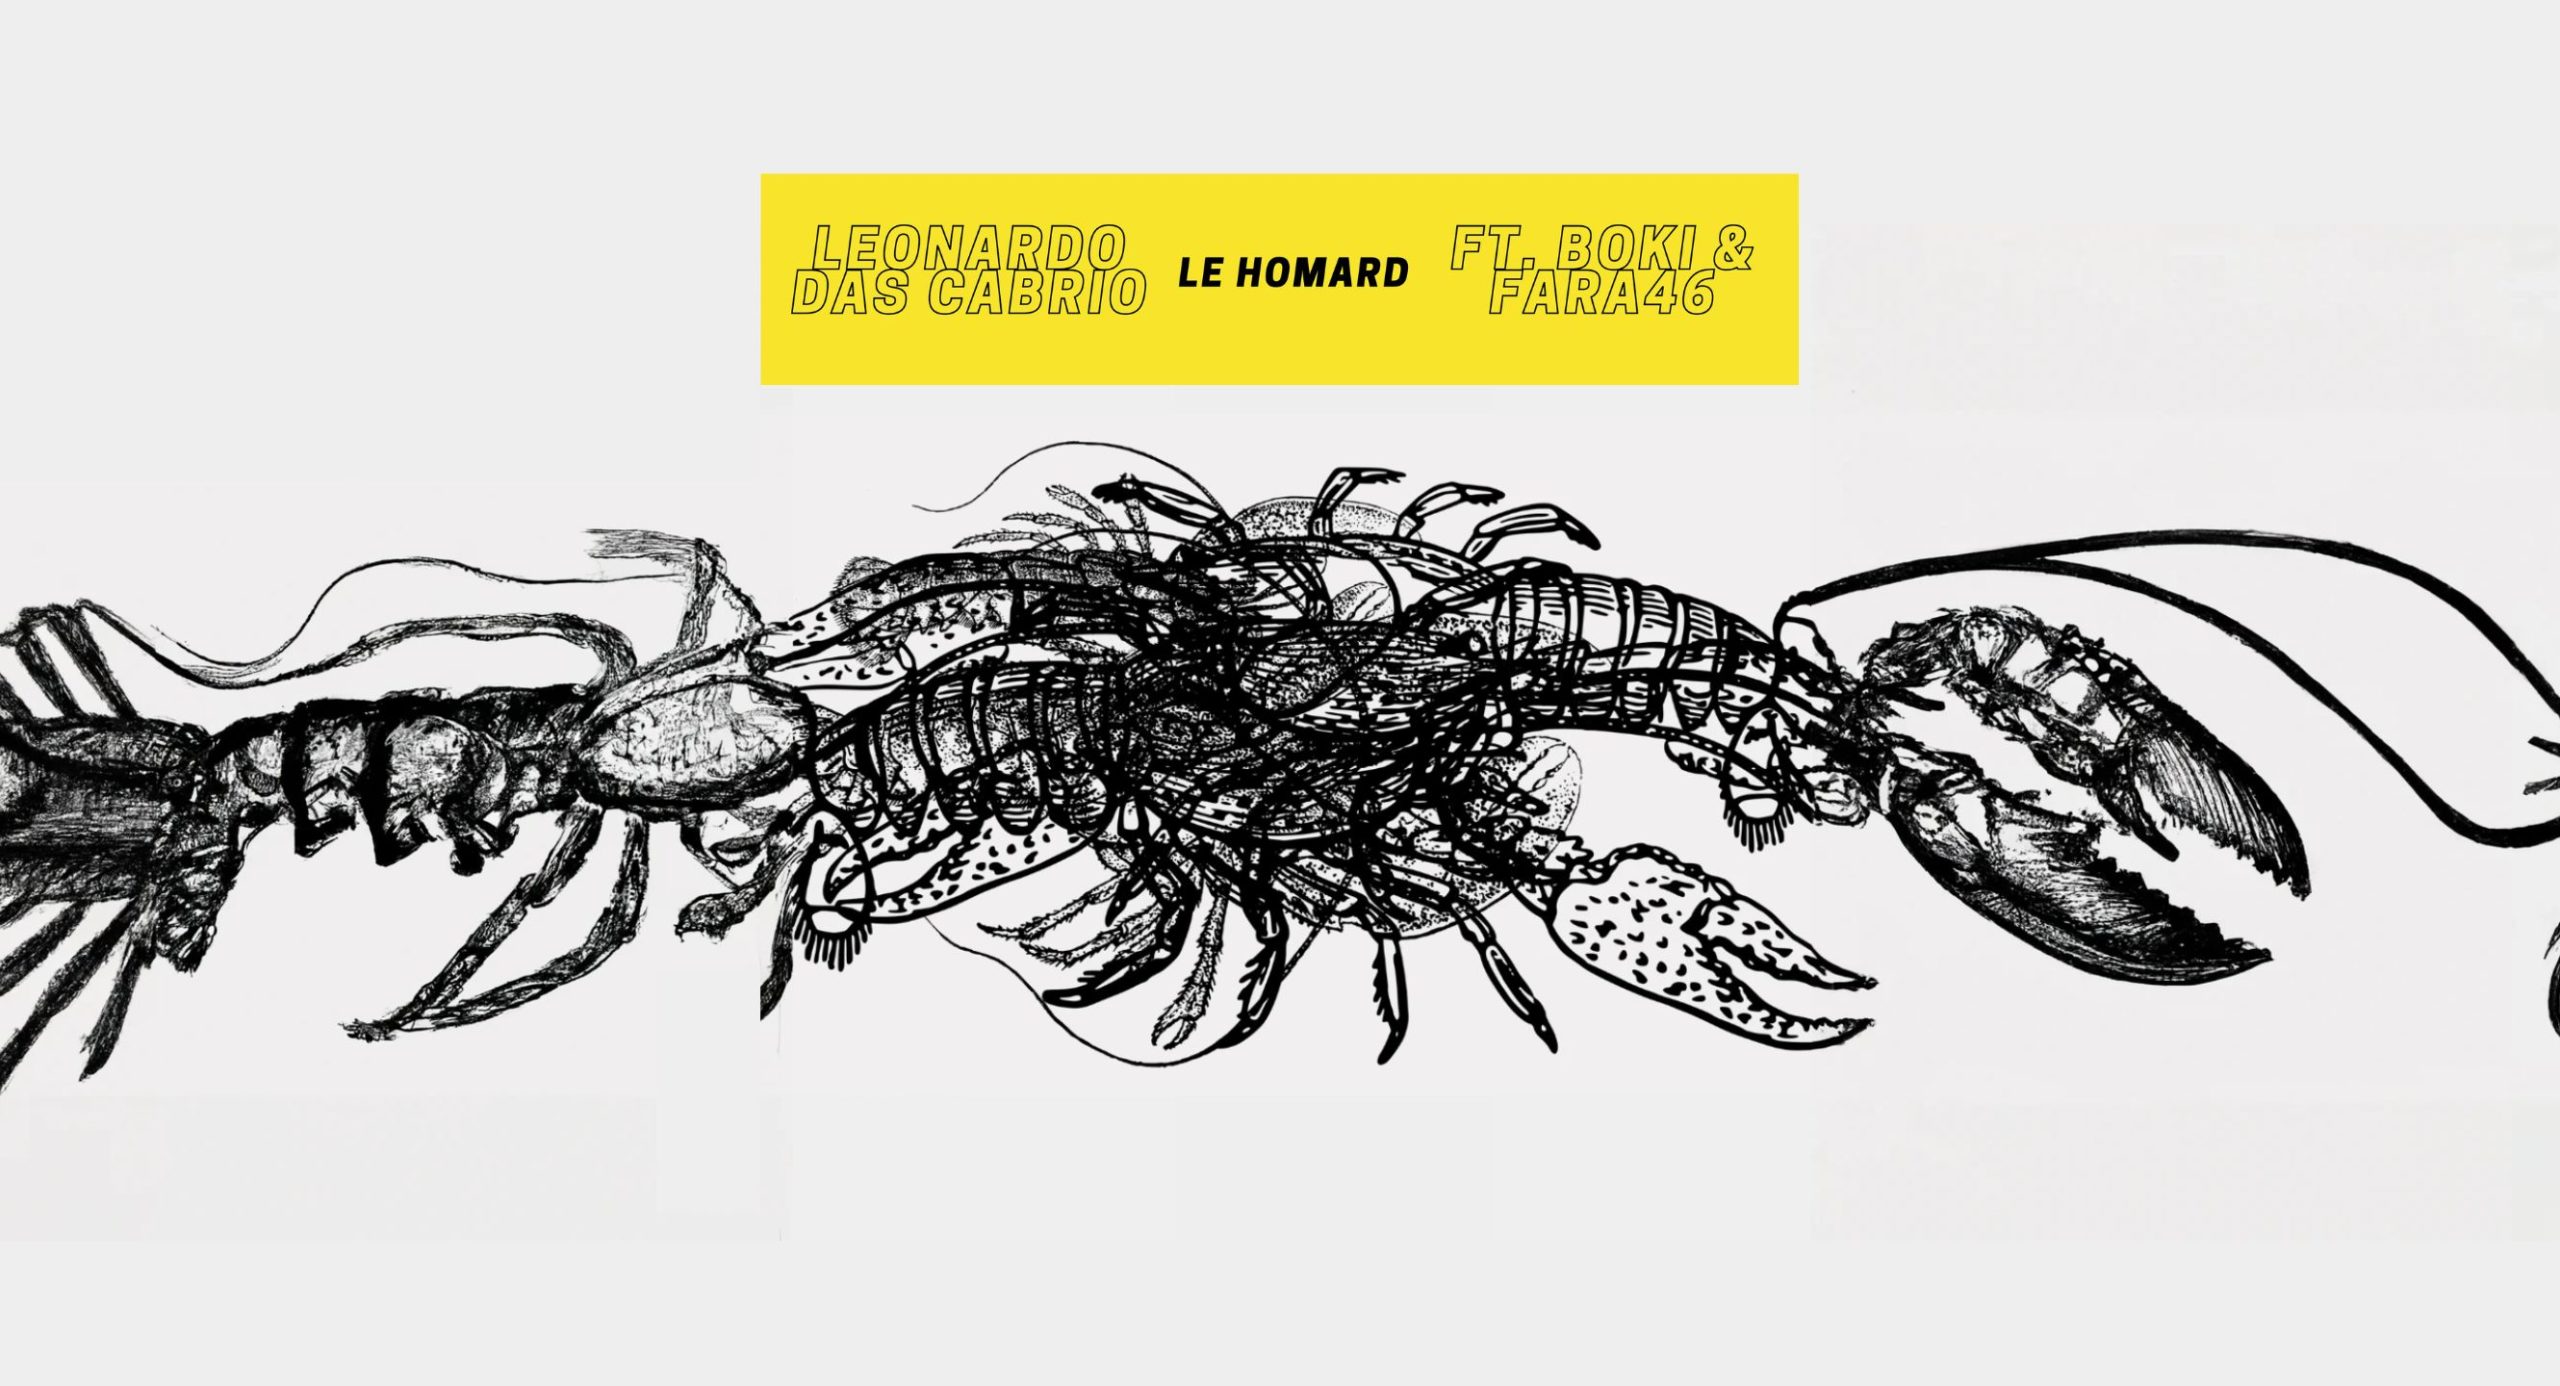 Leonardo Das Cabrio Le Homard ft. BOKI & FARA 46 New Single chill electro house music rnb hip hop